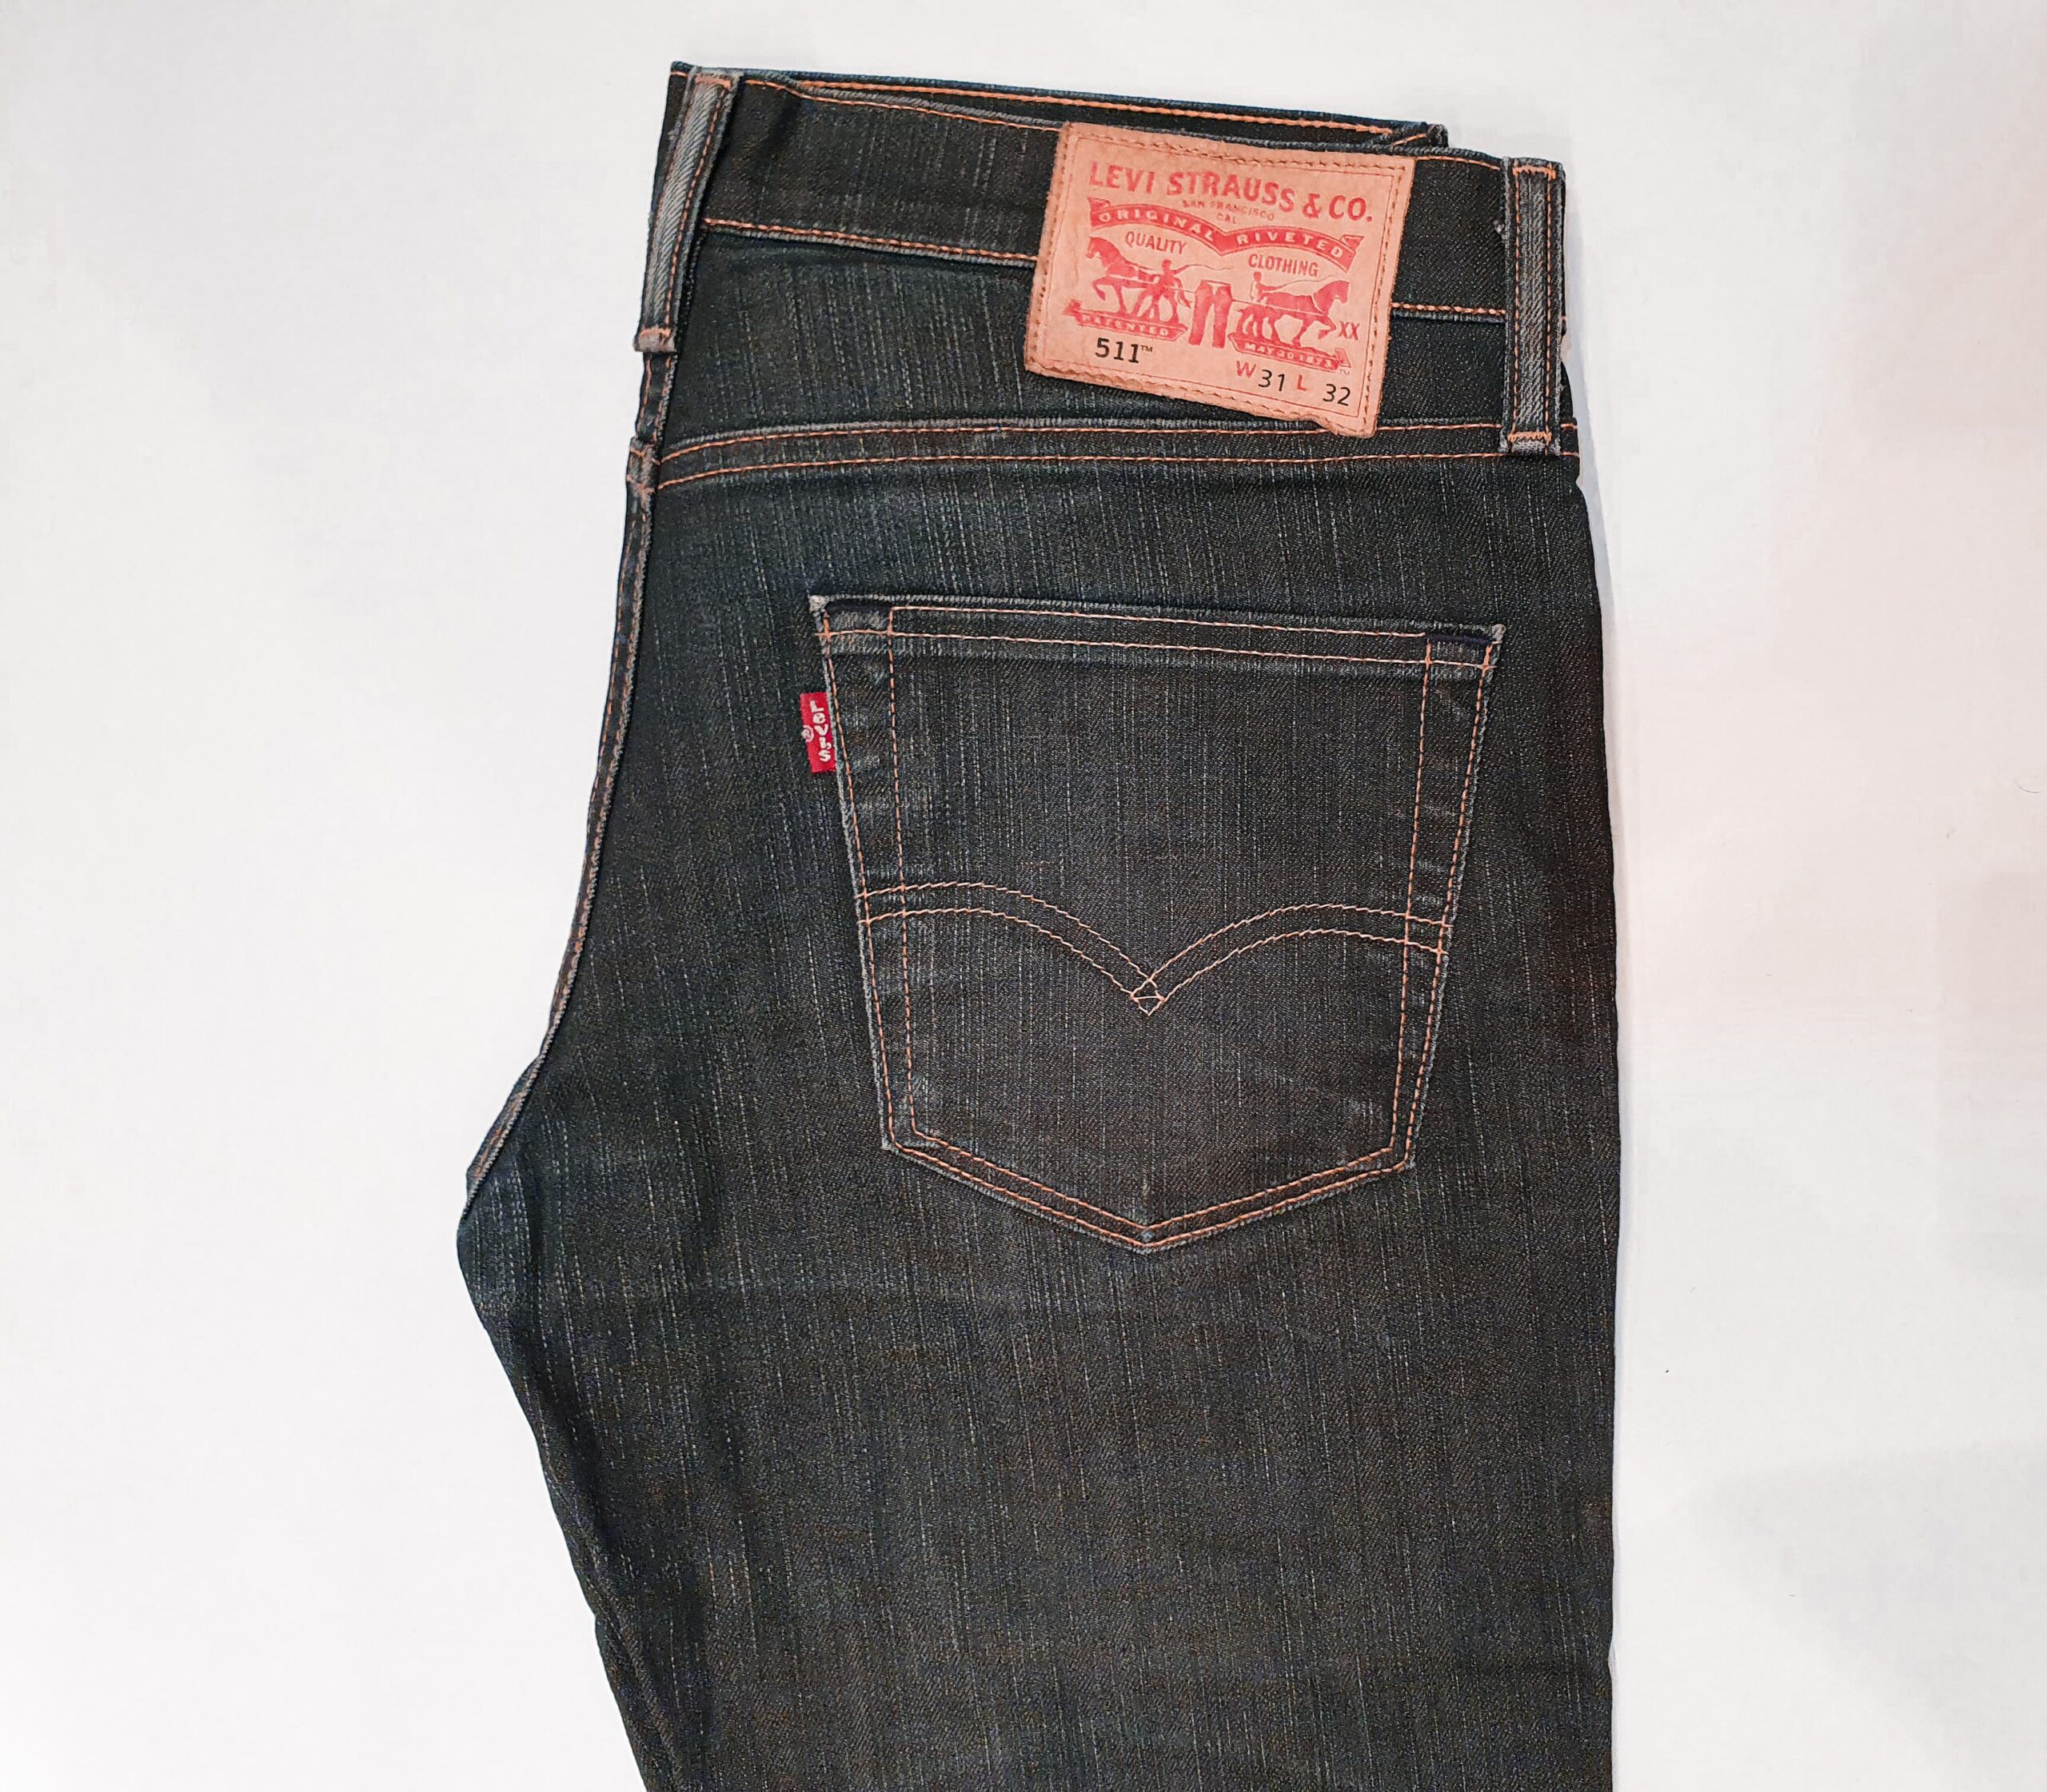 Levi's 511™ Slim Jeans W31 L32 - RepairJeans